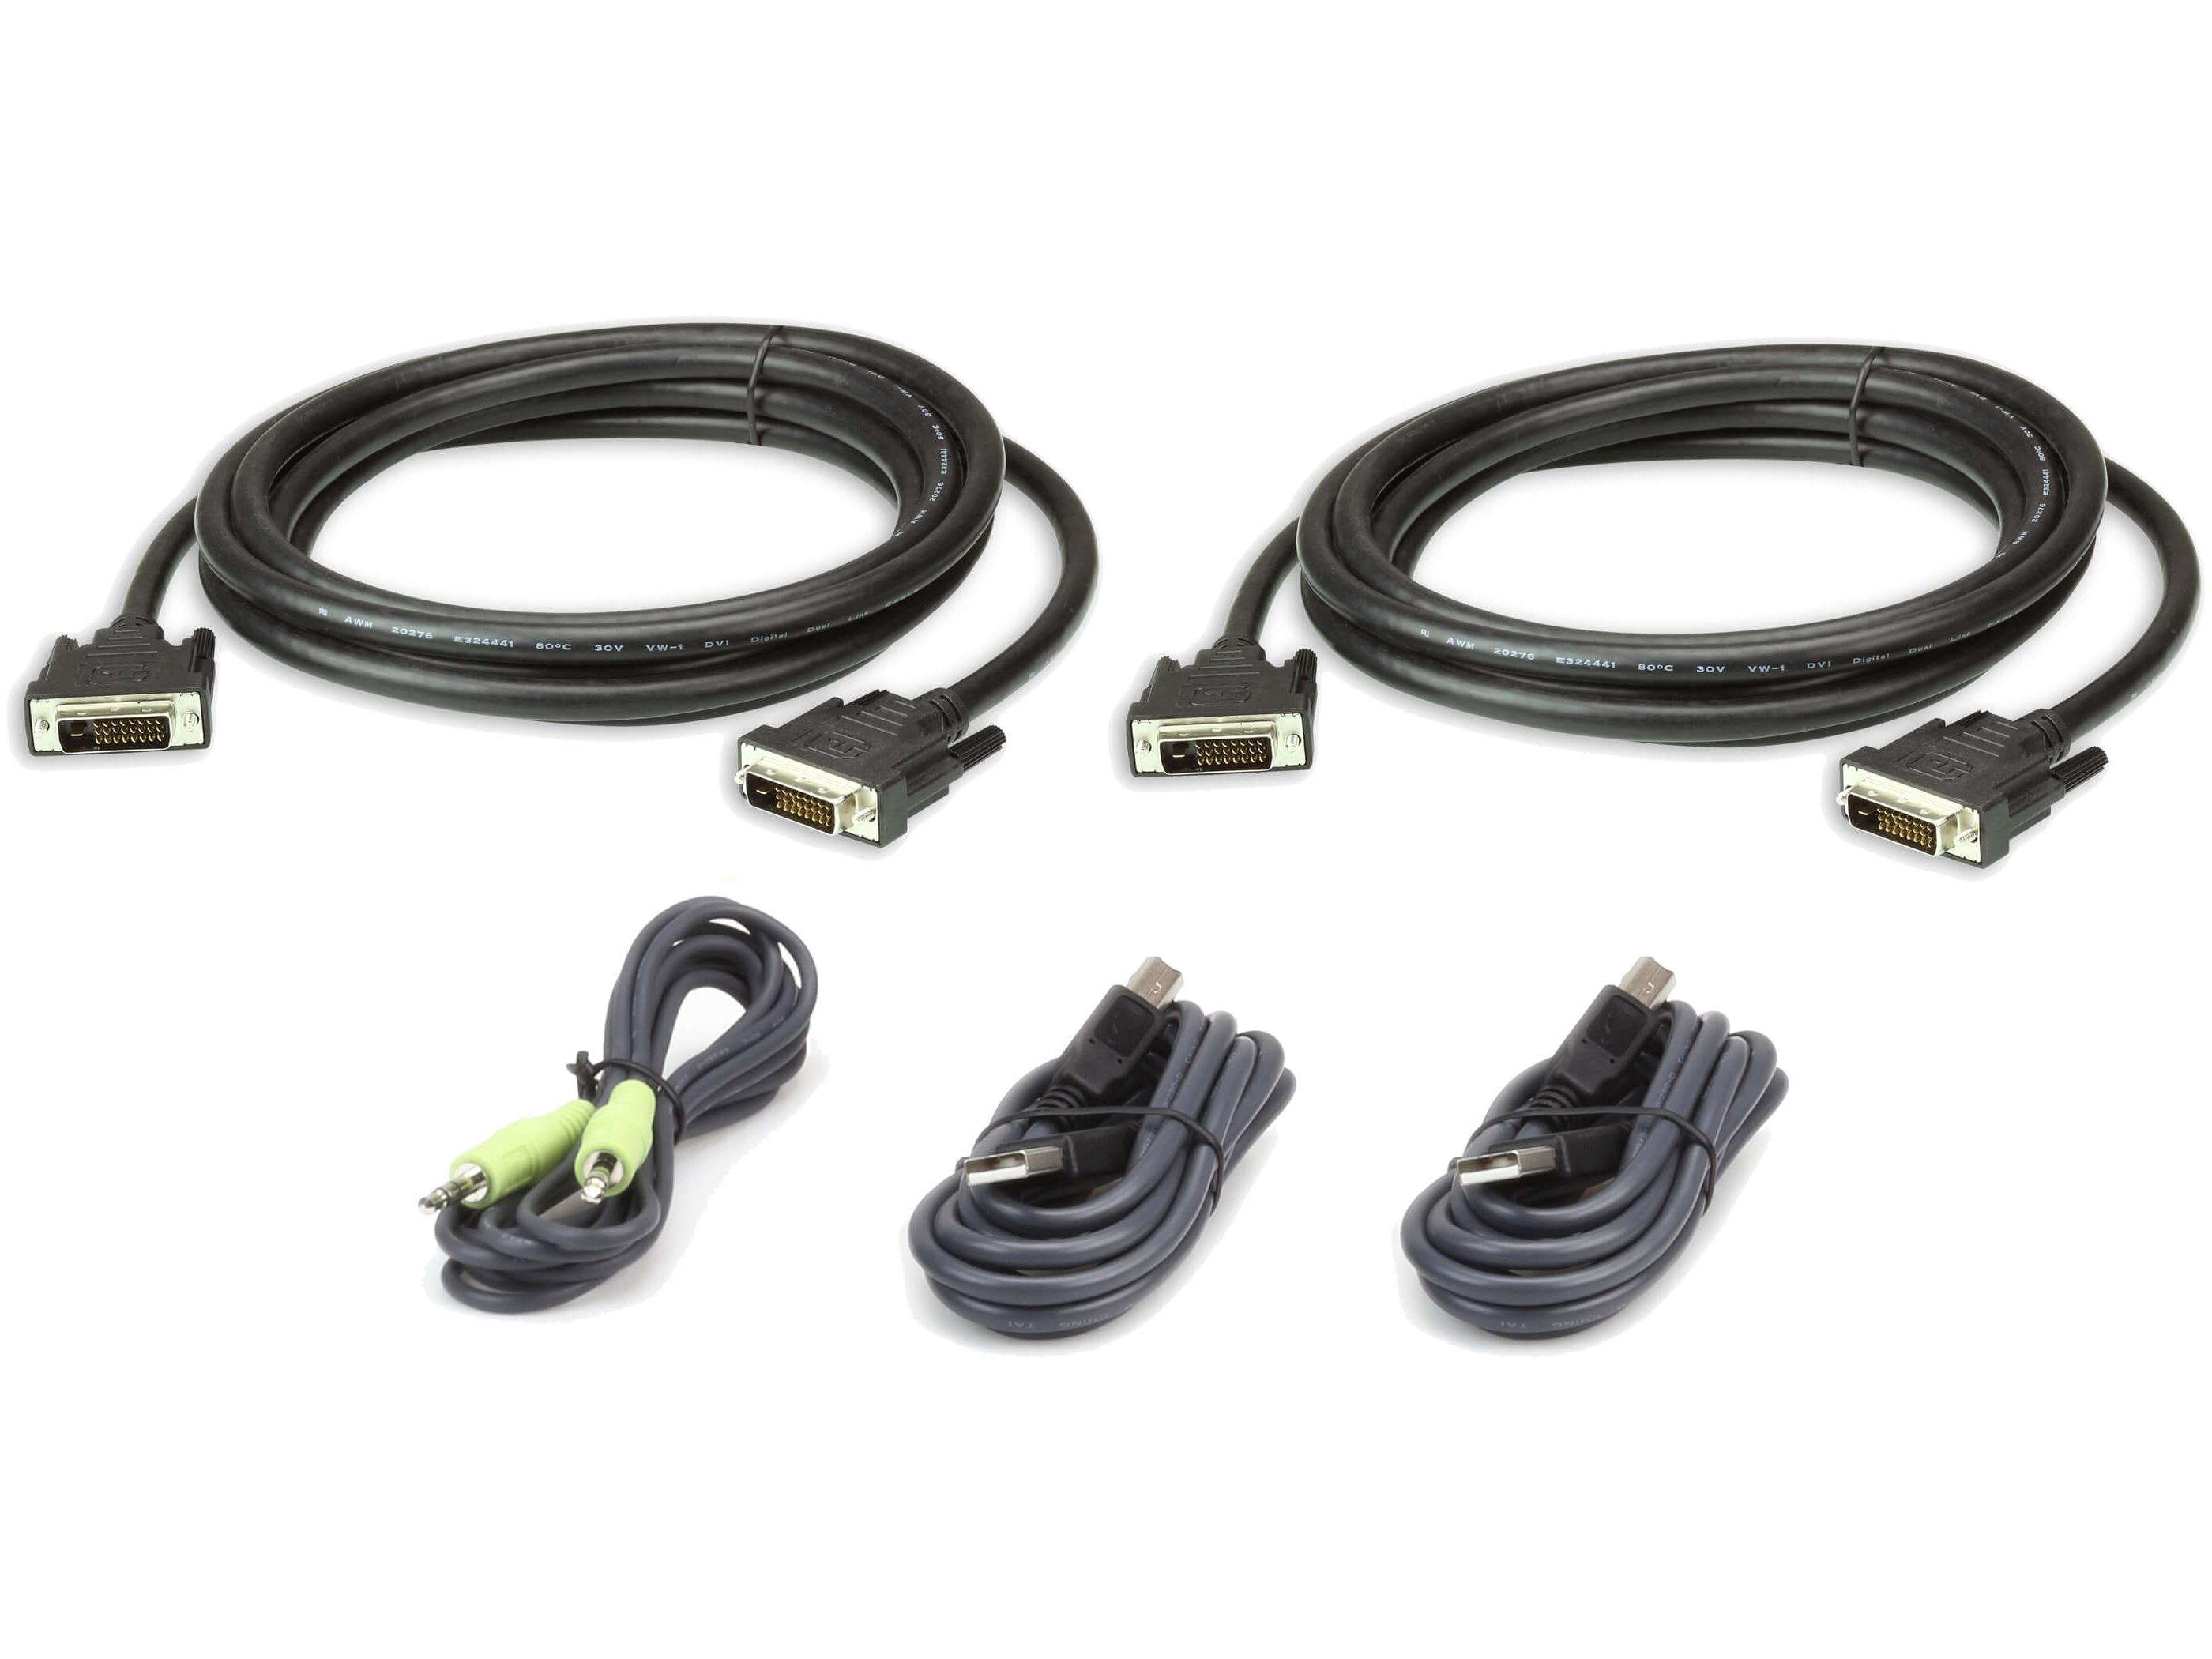 2L7D03UDX5 10ft Dual Display DVI-D Secure KVM Cable Kit by Aten